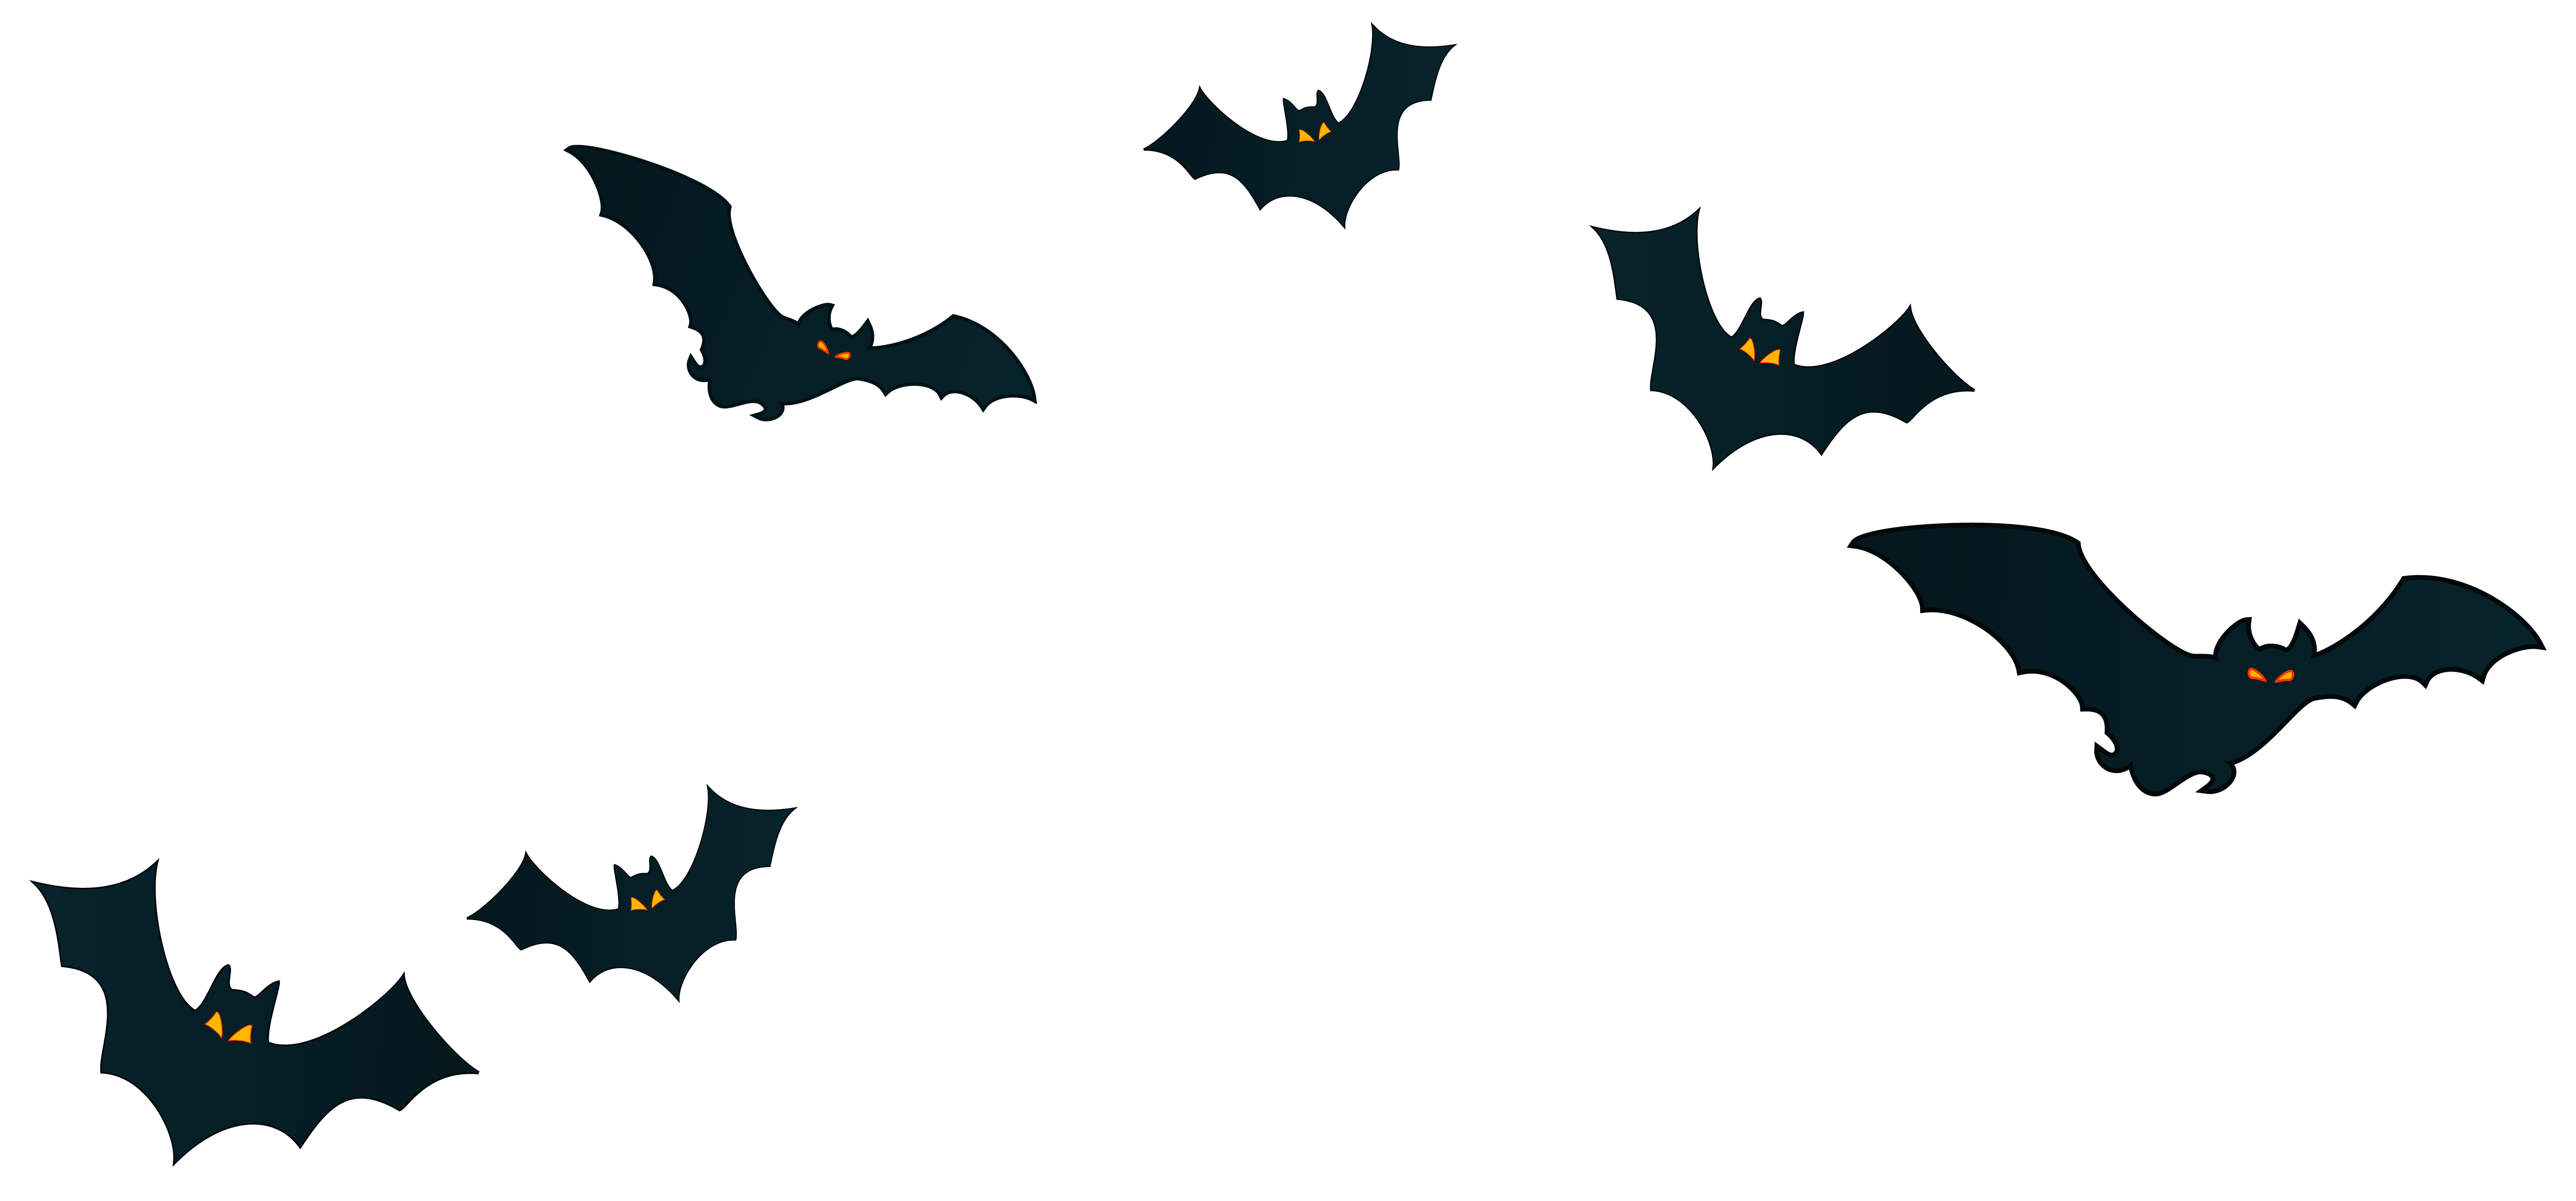 Halloween Bats Decor PNG Clipart Image.